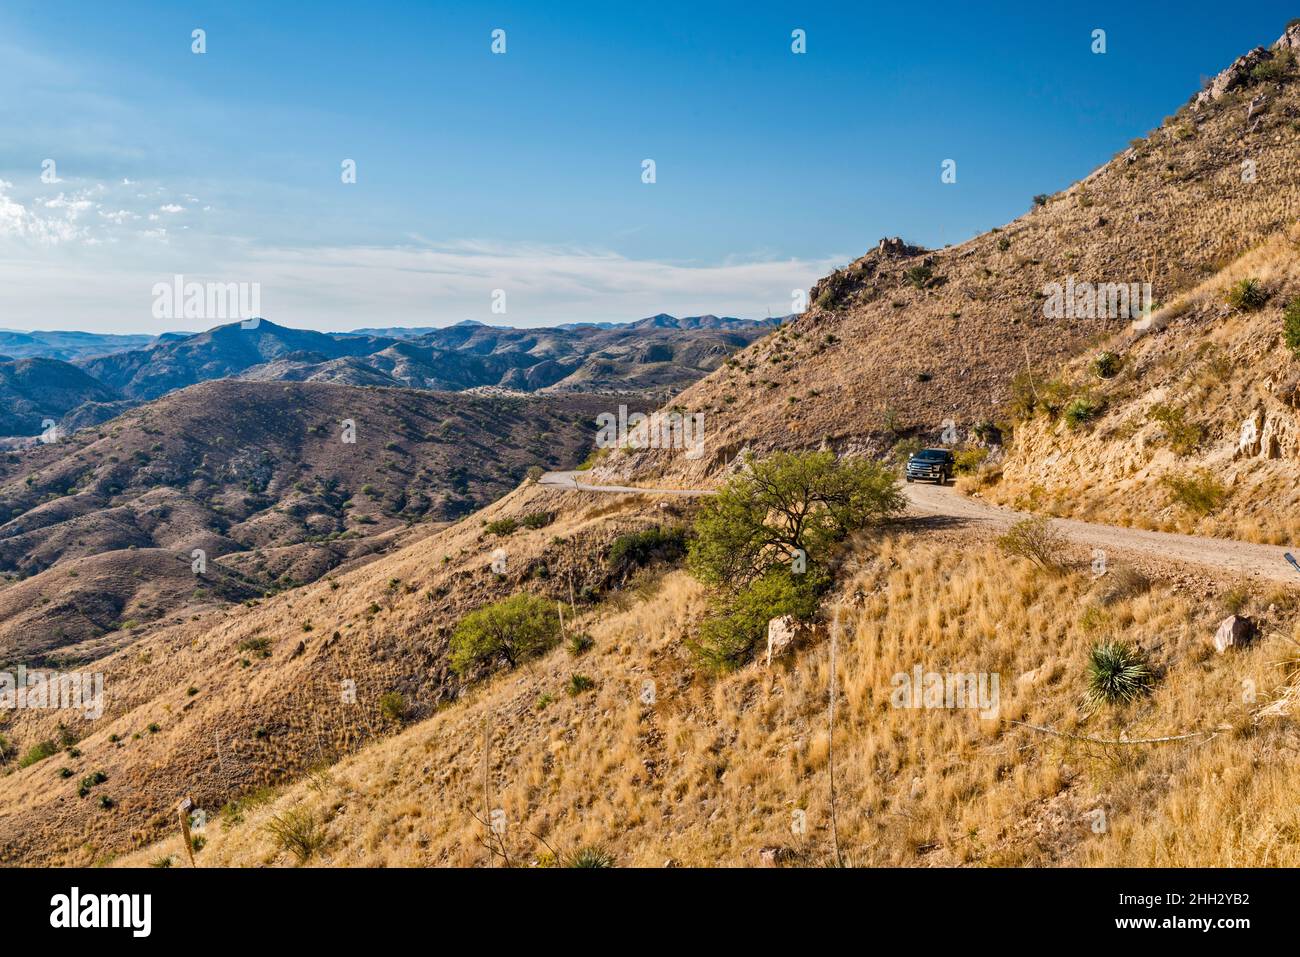 Ruby Road, in der Nähe der mexikanischen Grenze, Atascosa Mountains, Coronado National Forest, Arizona, USA Stockfoto